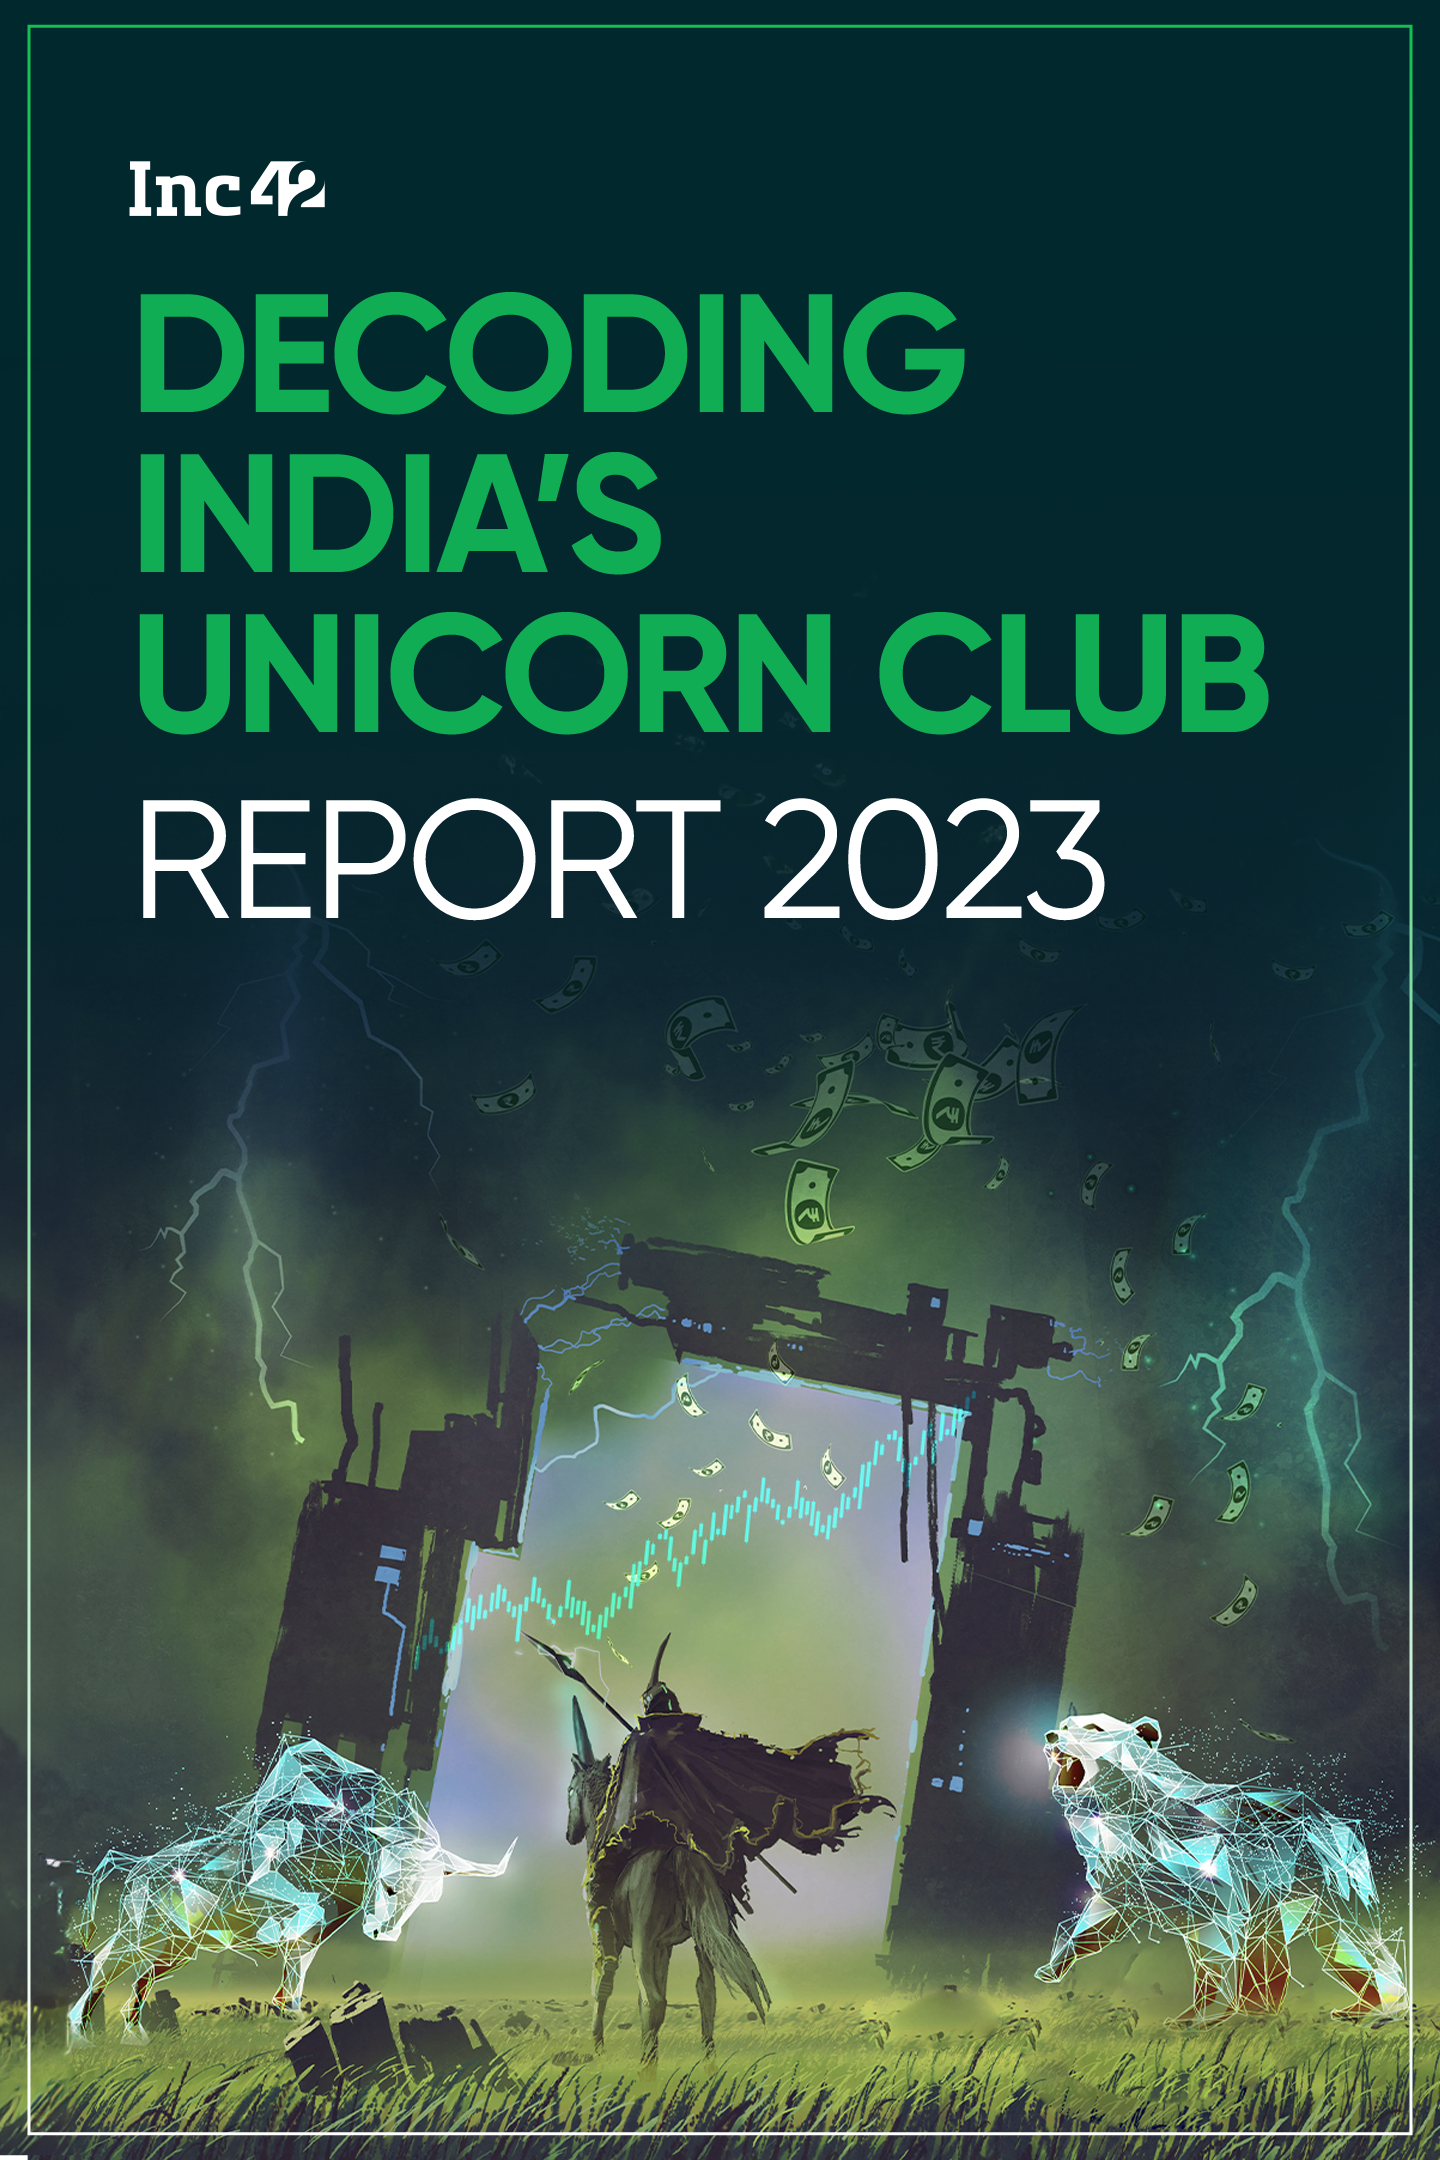 Decoding India’s Unicorn Club Report, 2023